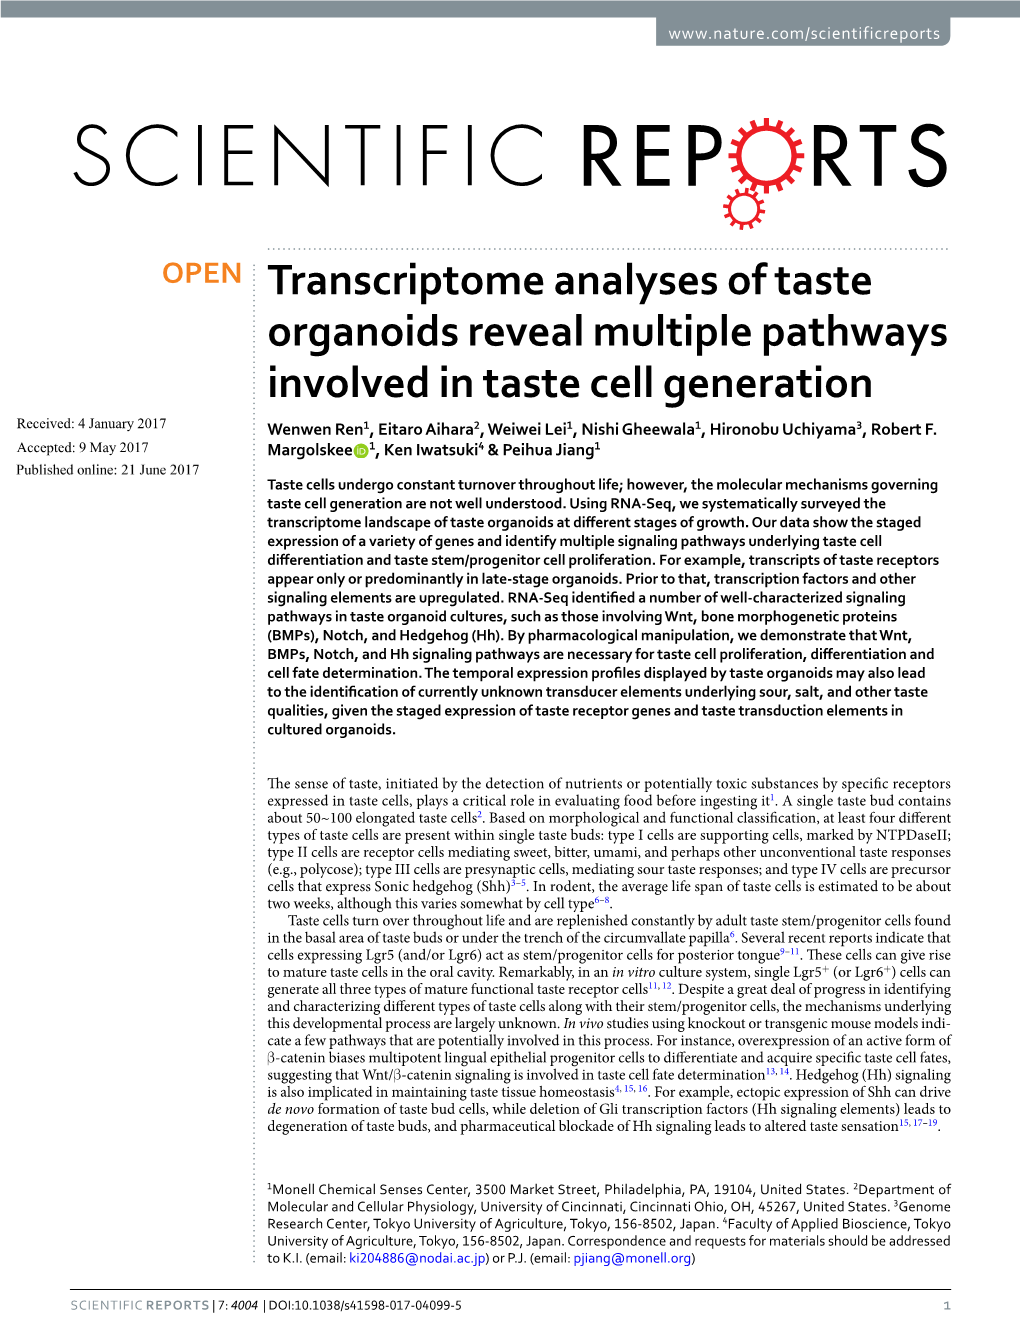 Transcriptome Analyses of Taste Organoids Reveal Multiple Pathways